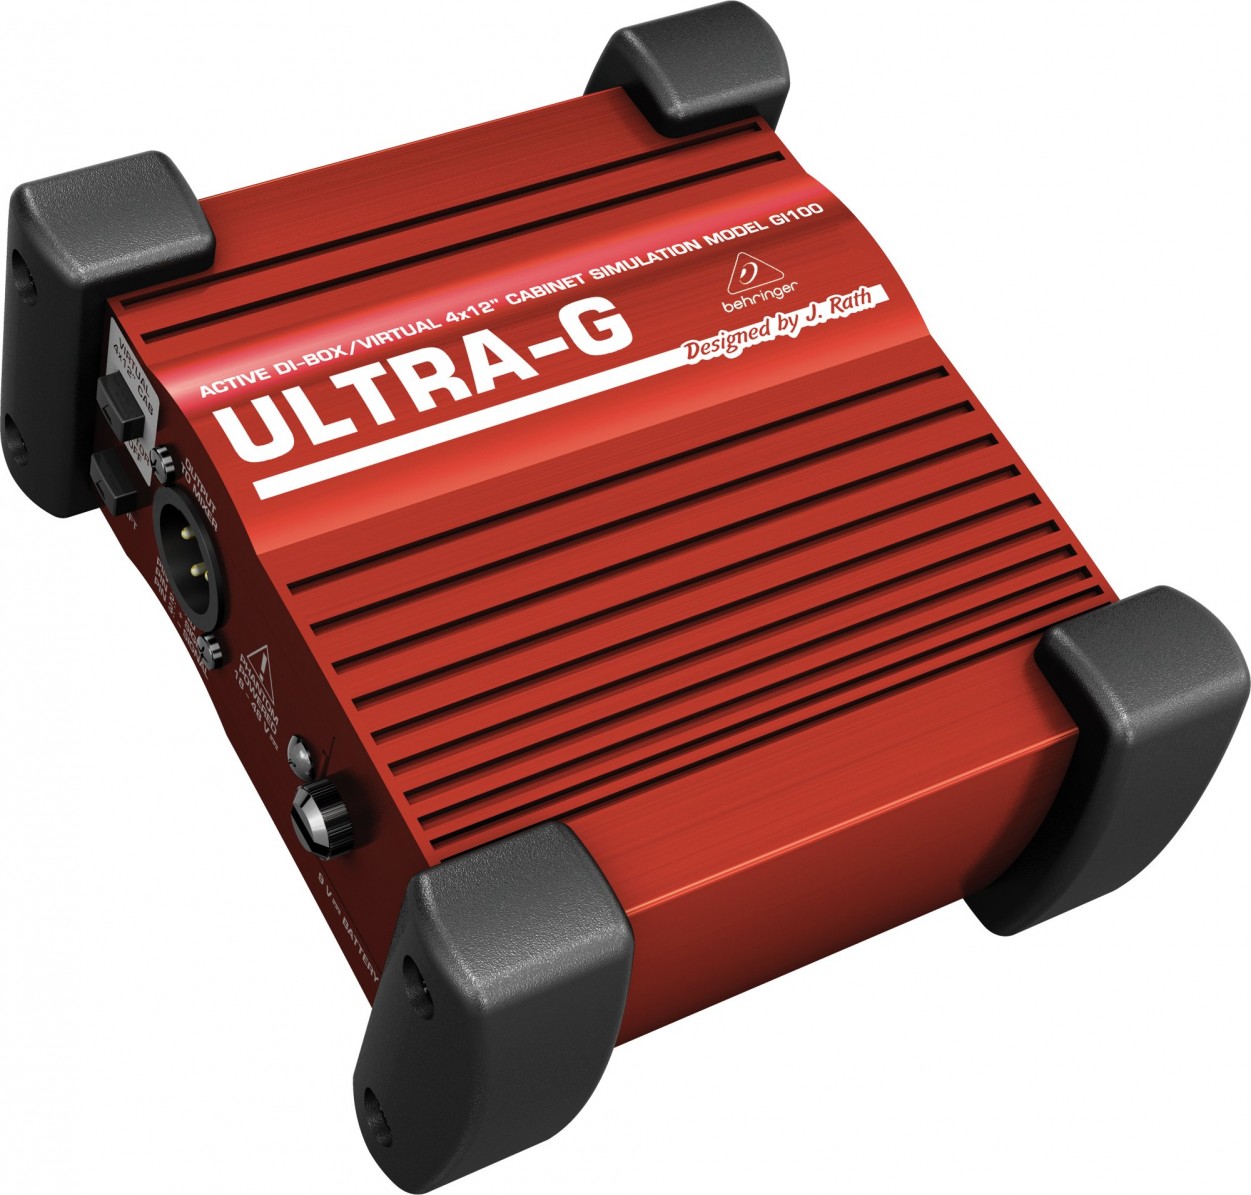 BEHRINGER GI 100 ULTRA-G - Активный DI-box с эмуляцией гитарного кабинета 4 х 12"